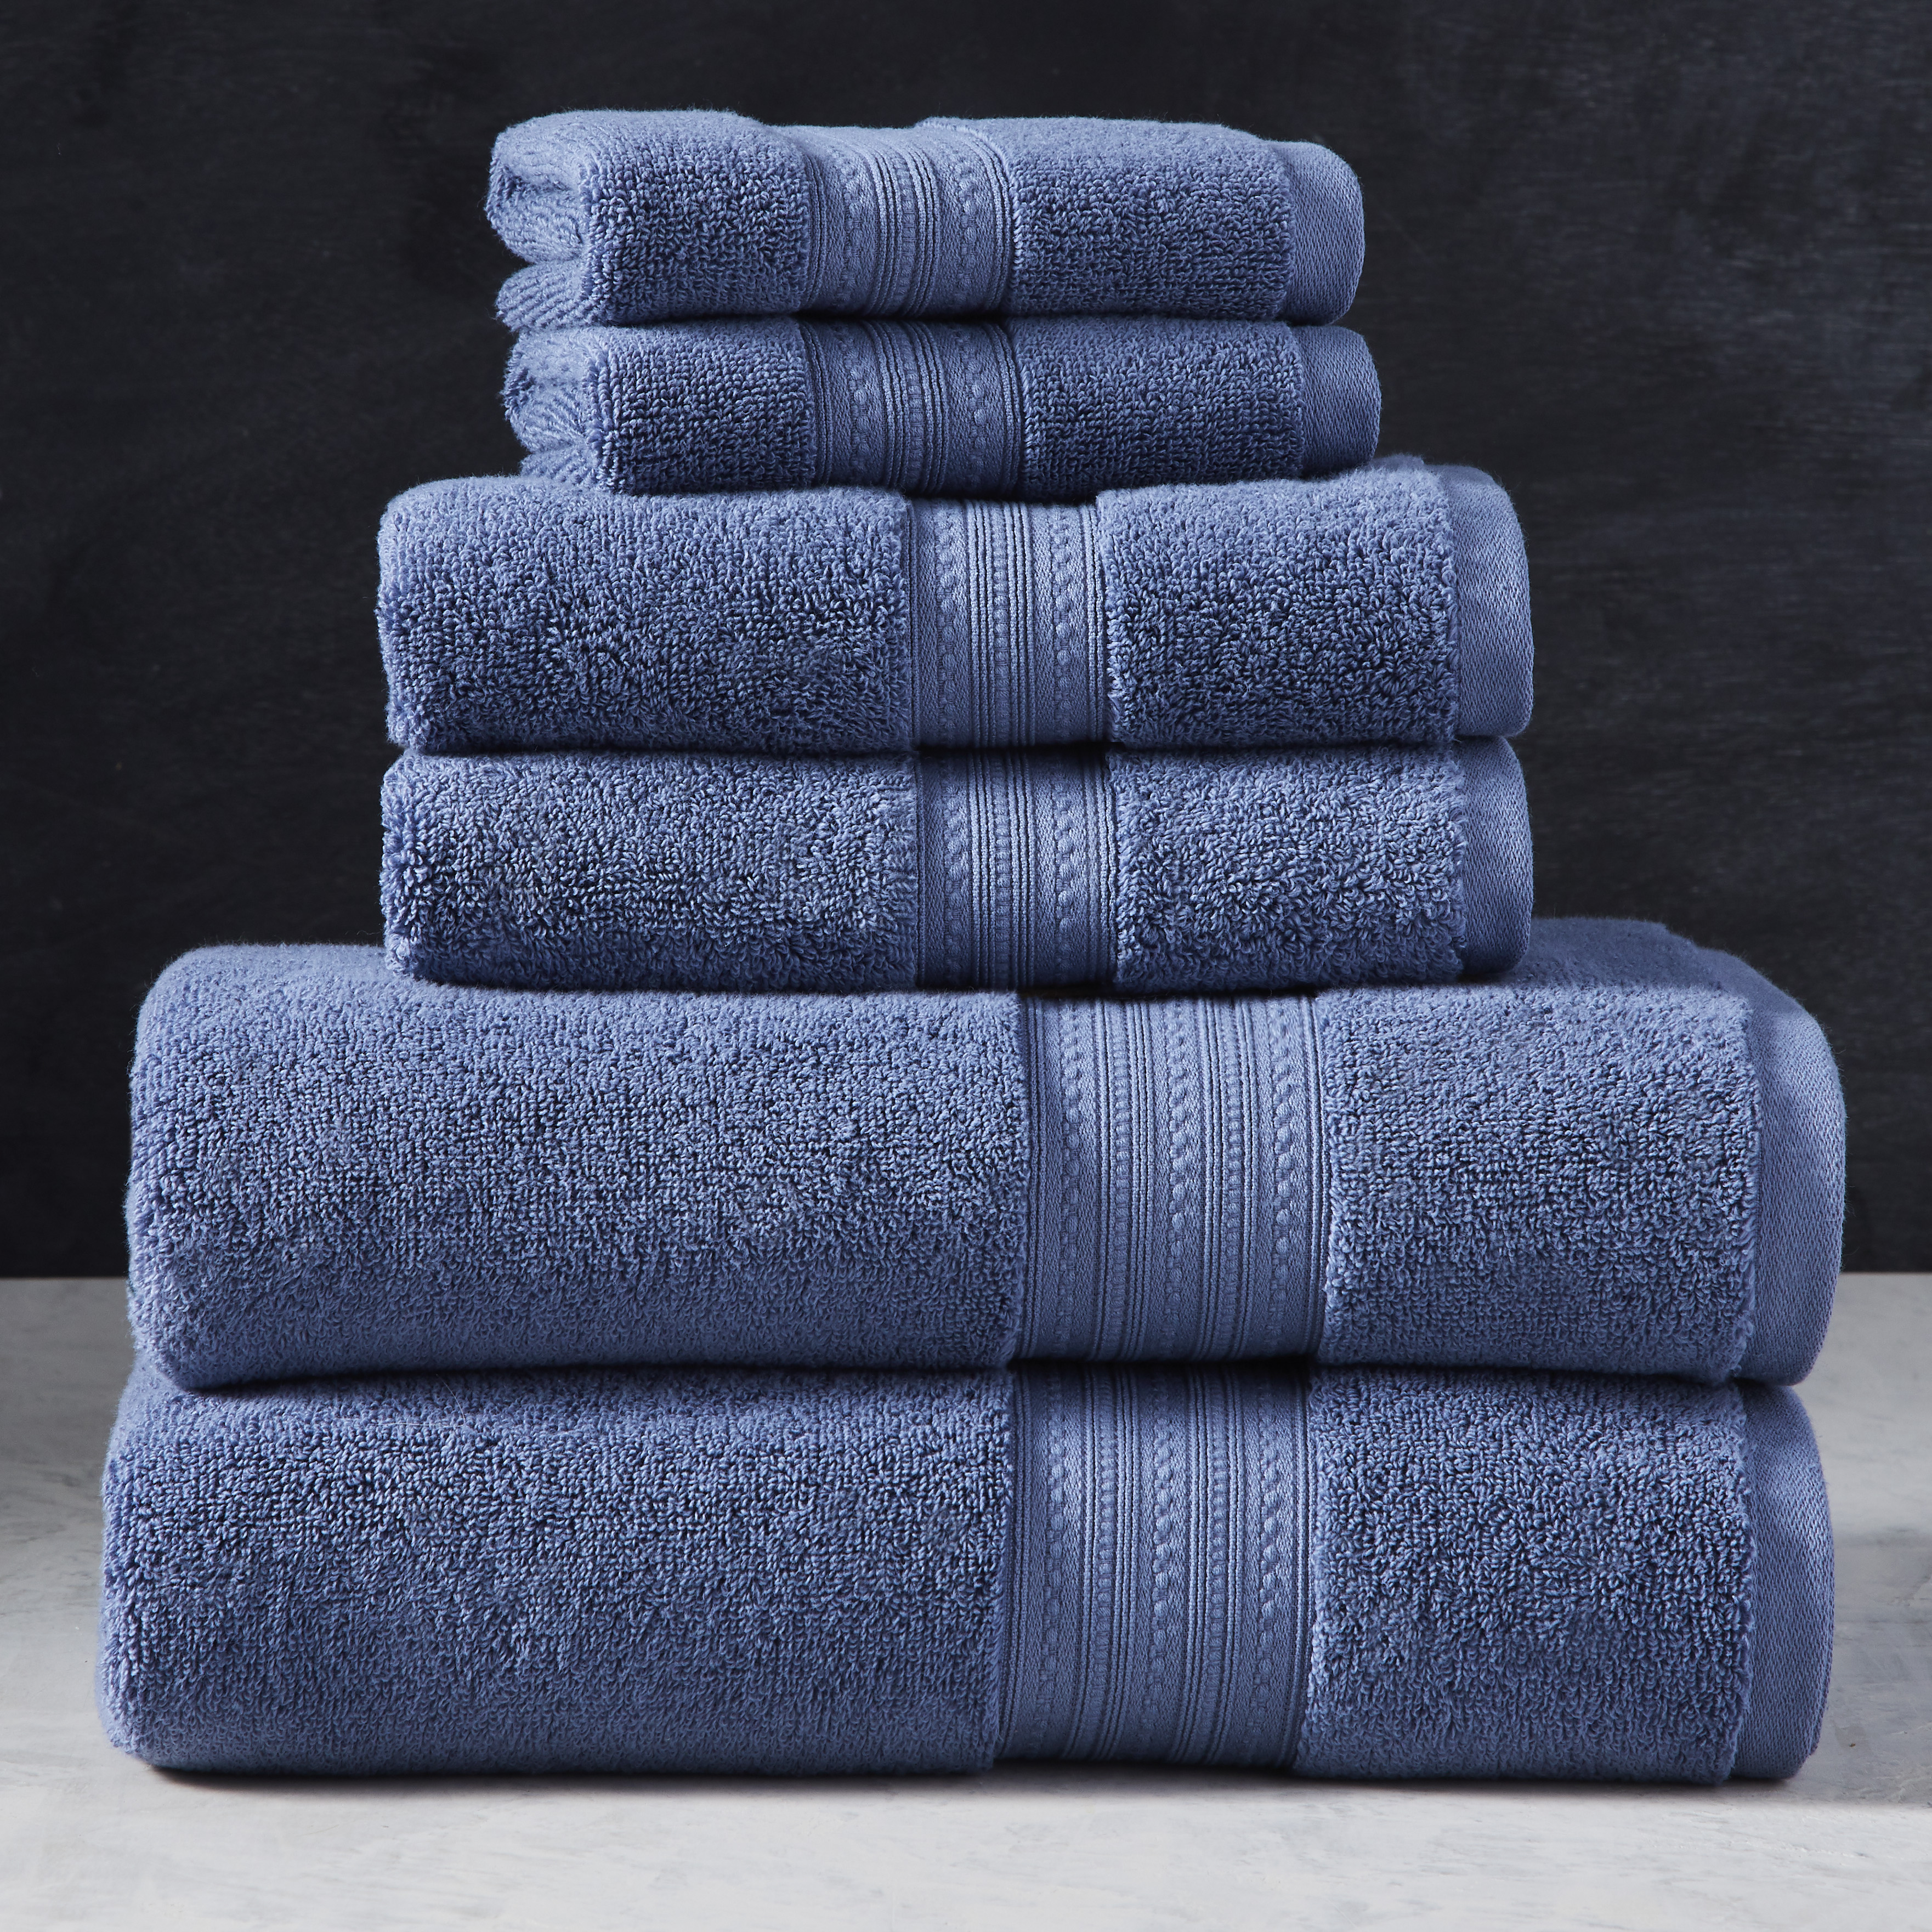 Better Homes & Gardens Signature Soft Hand Towel, Insignia Blue - image 2 of 6